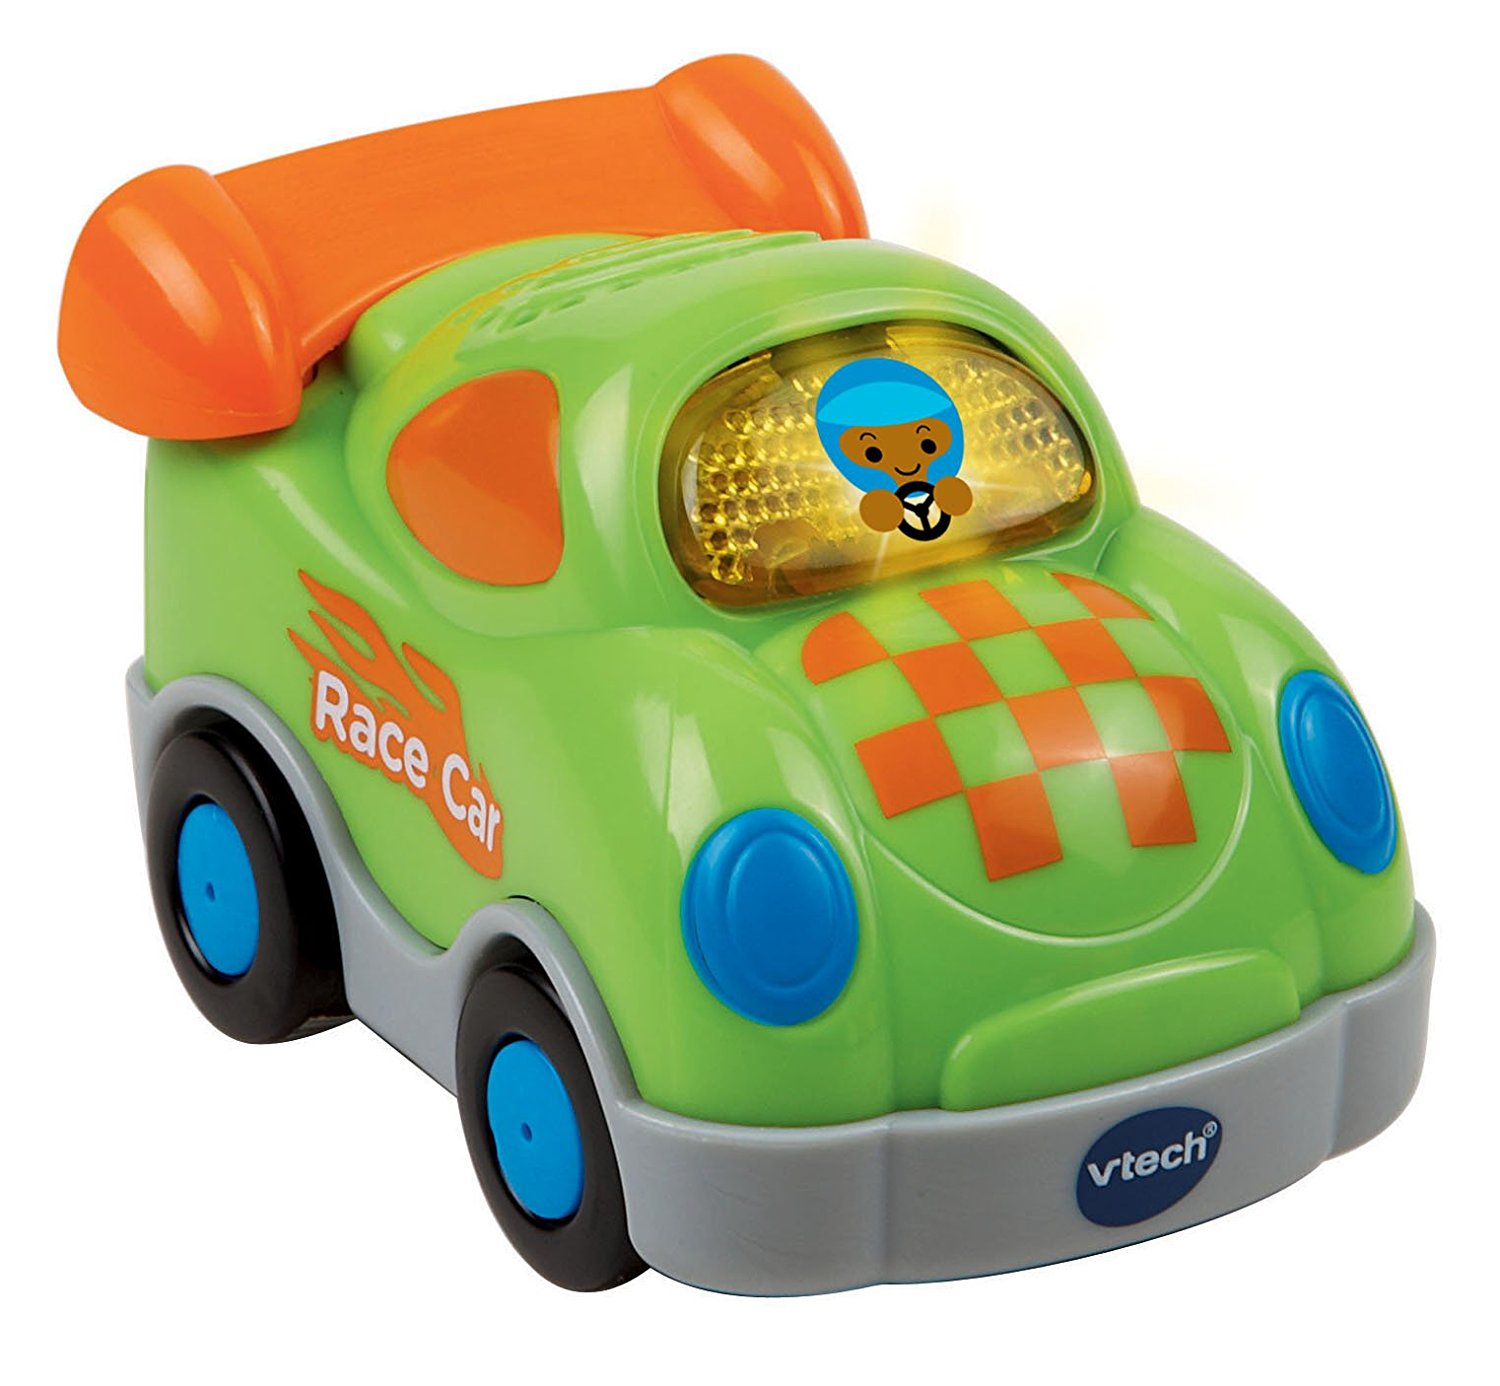 Racing car toy photo